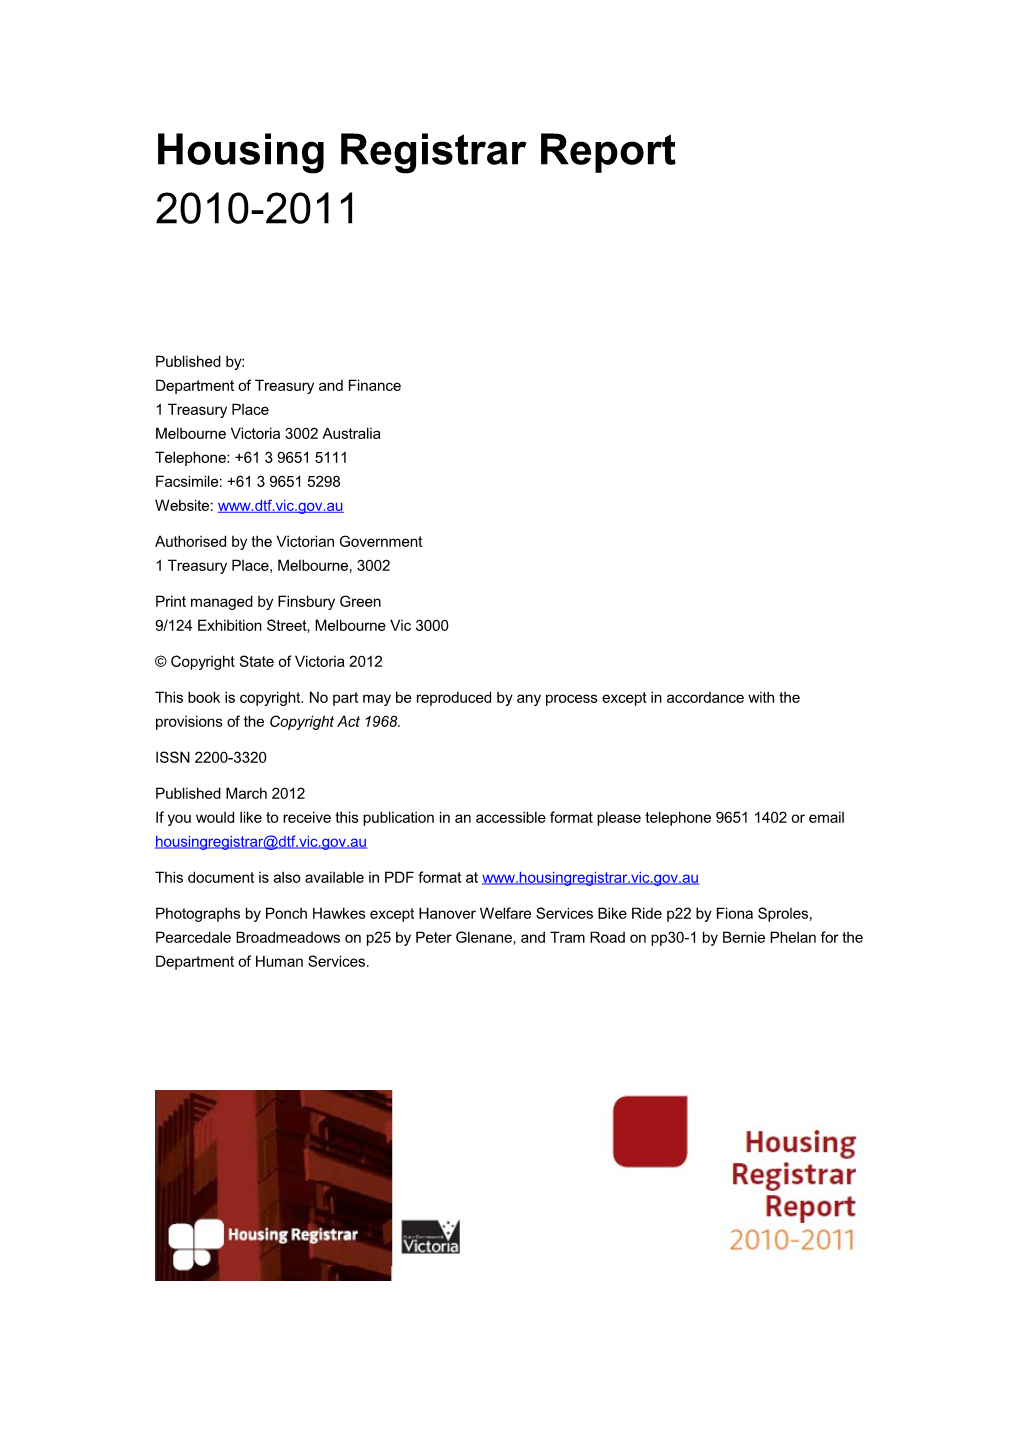 Housing Registrar Report 2010-11